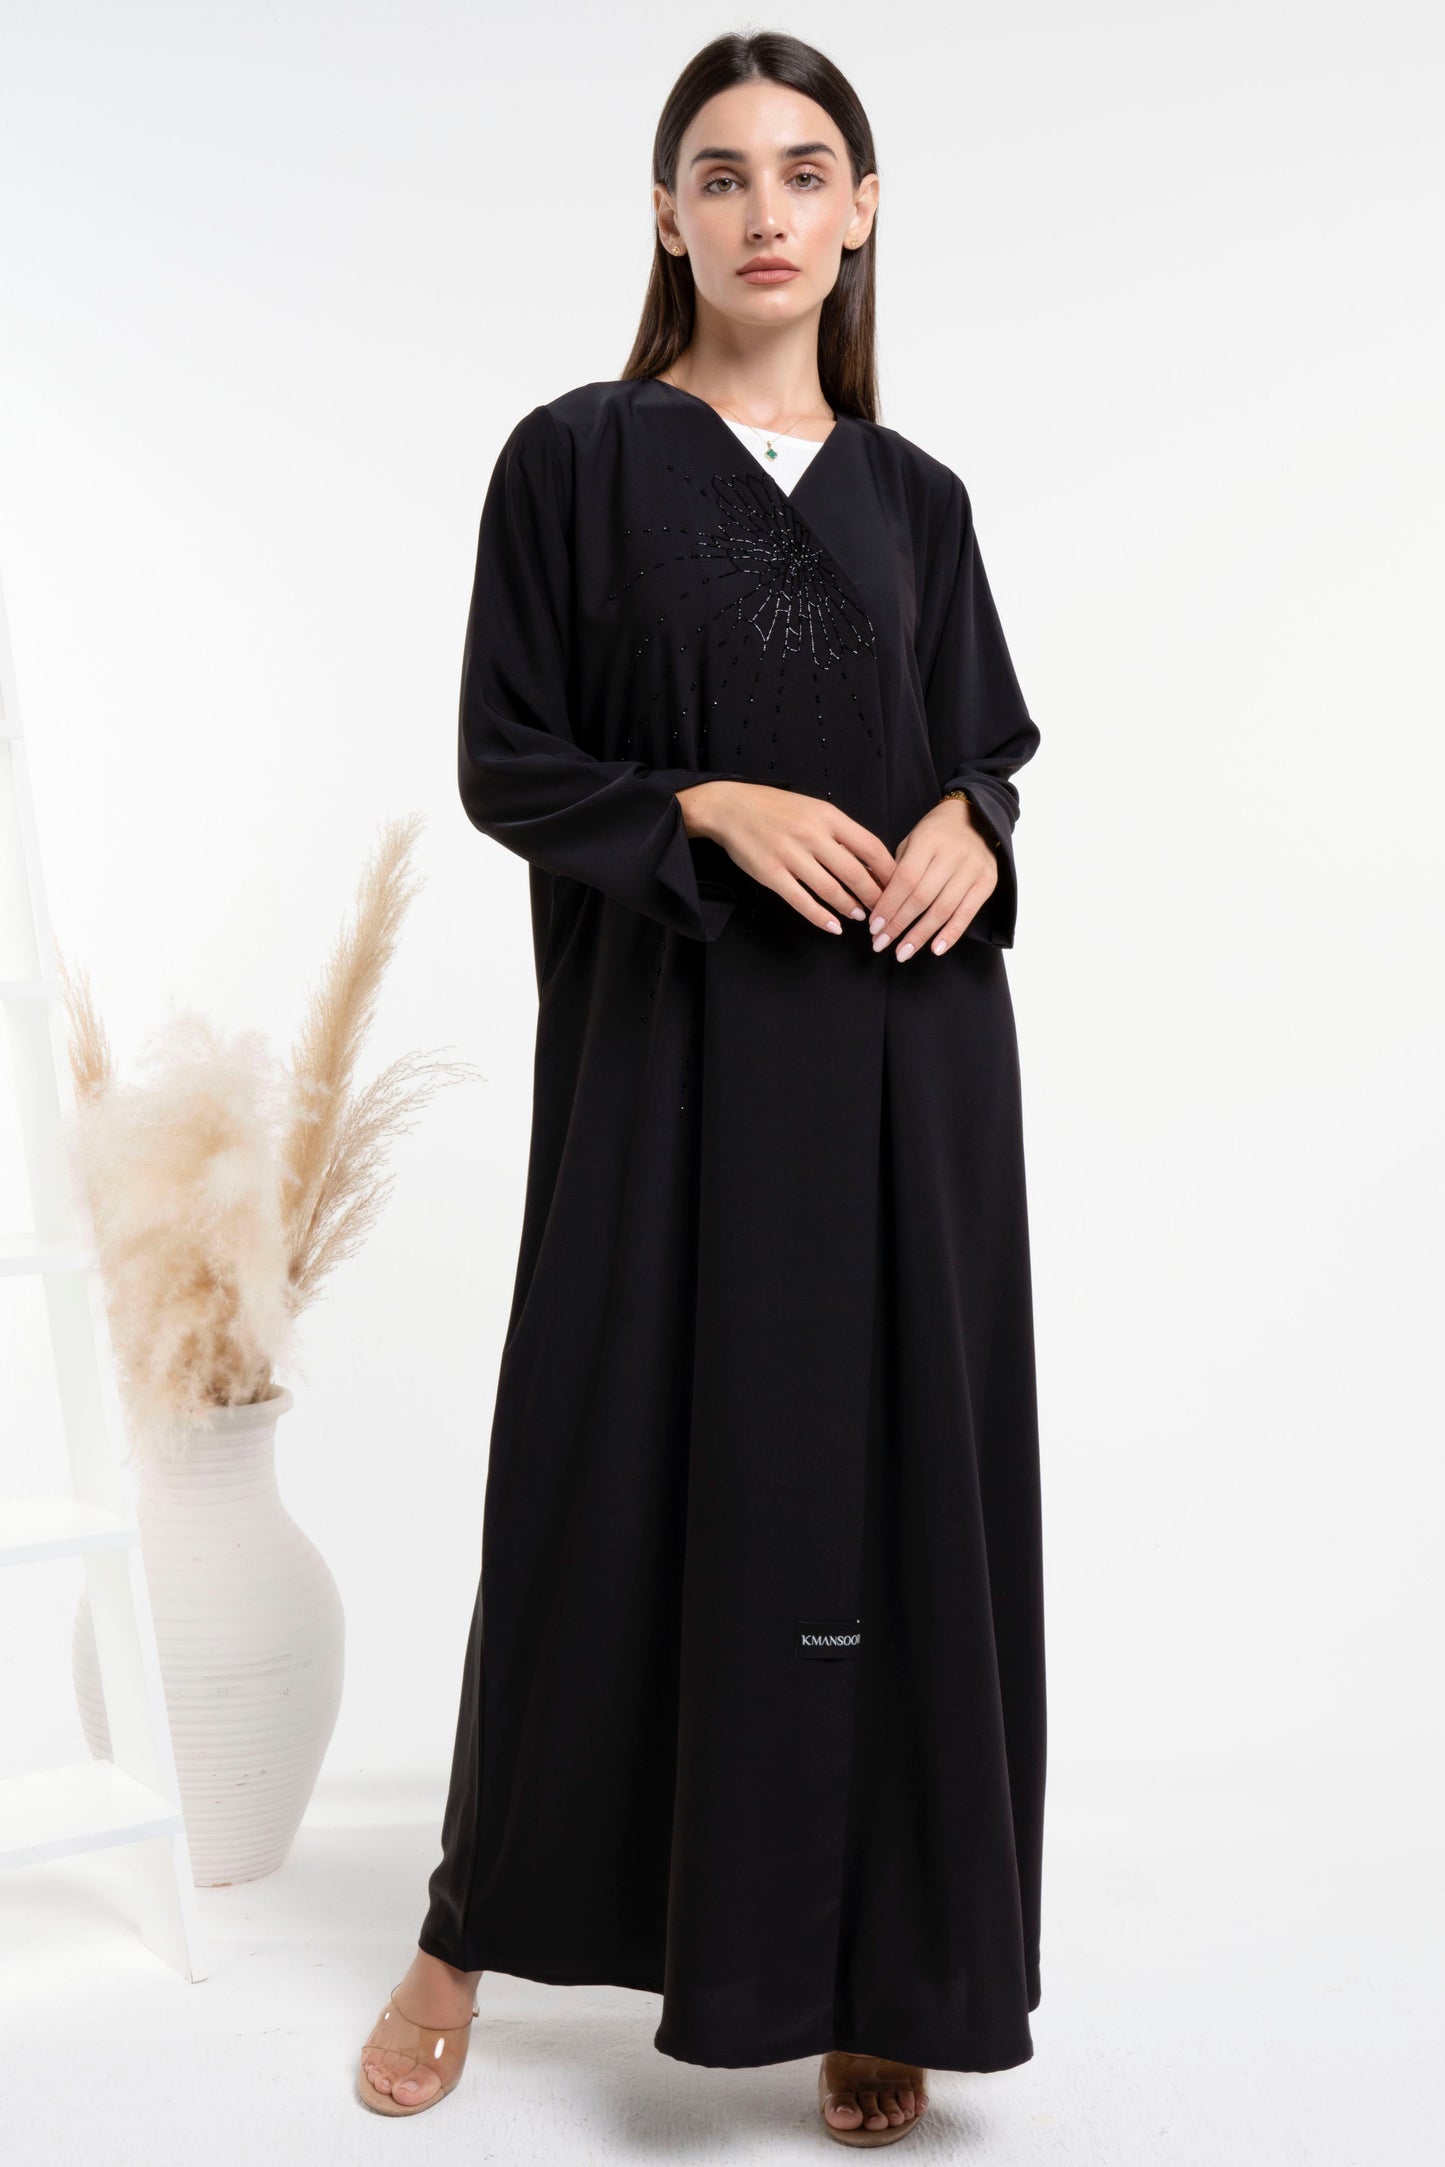 Black Overlap Abaya With Black Bead Design On Neck